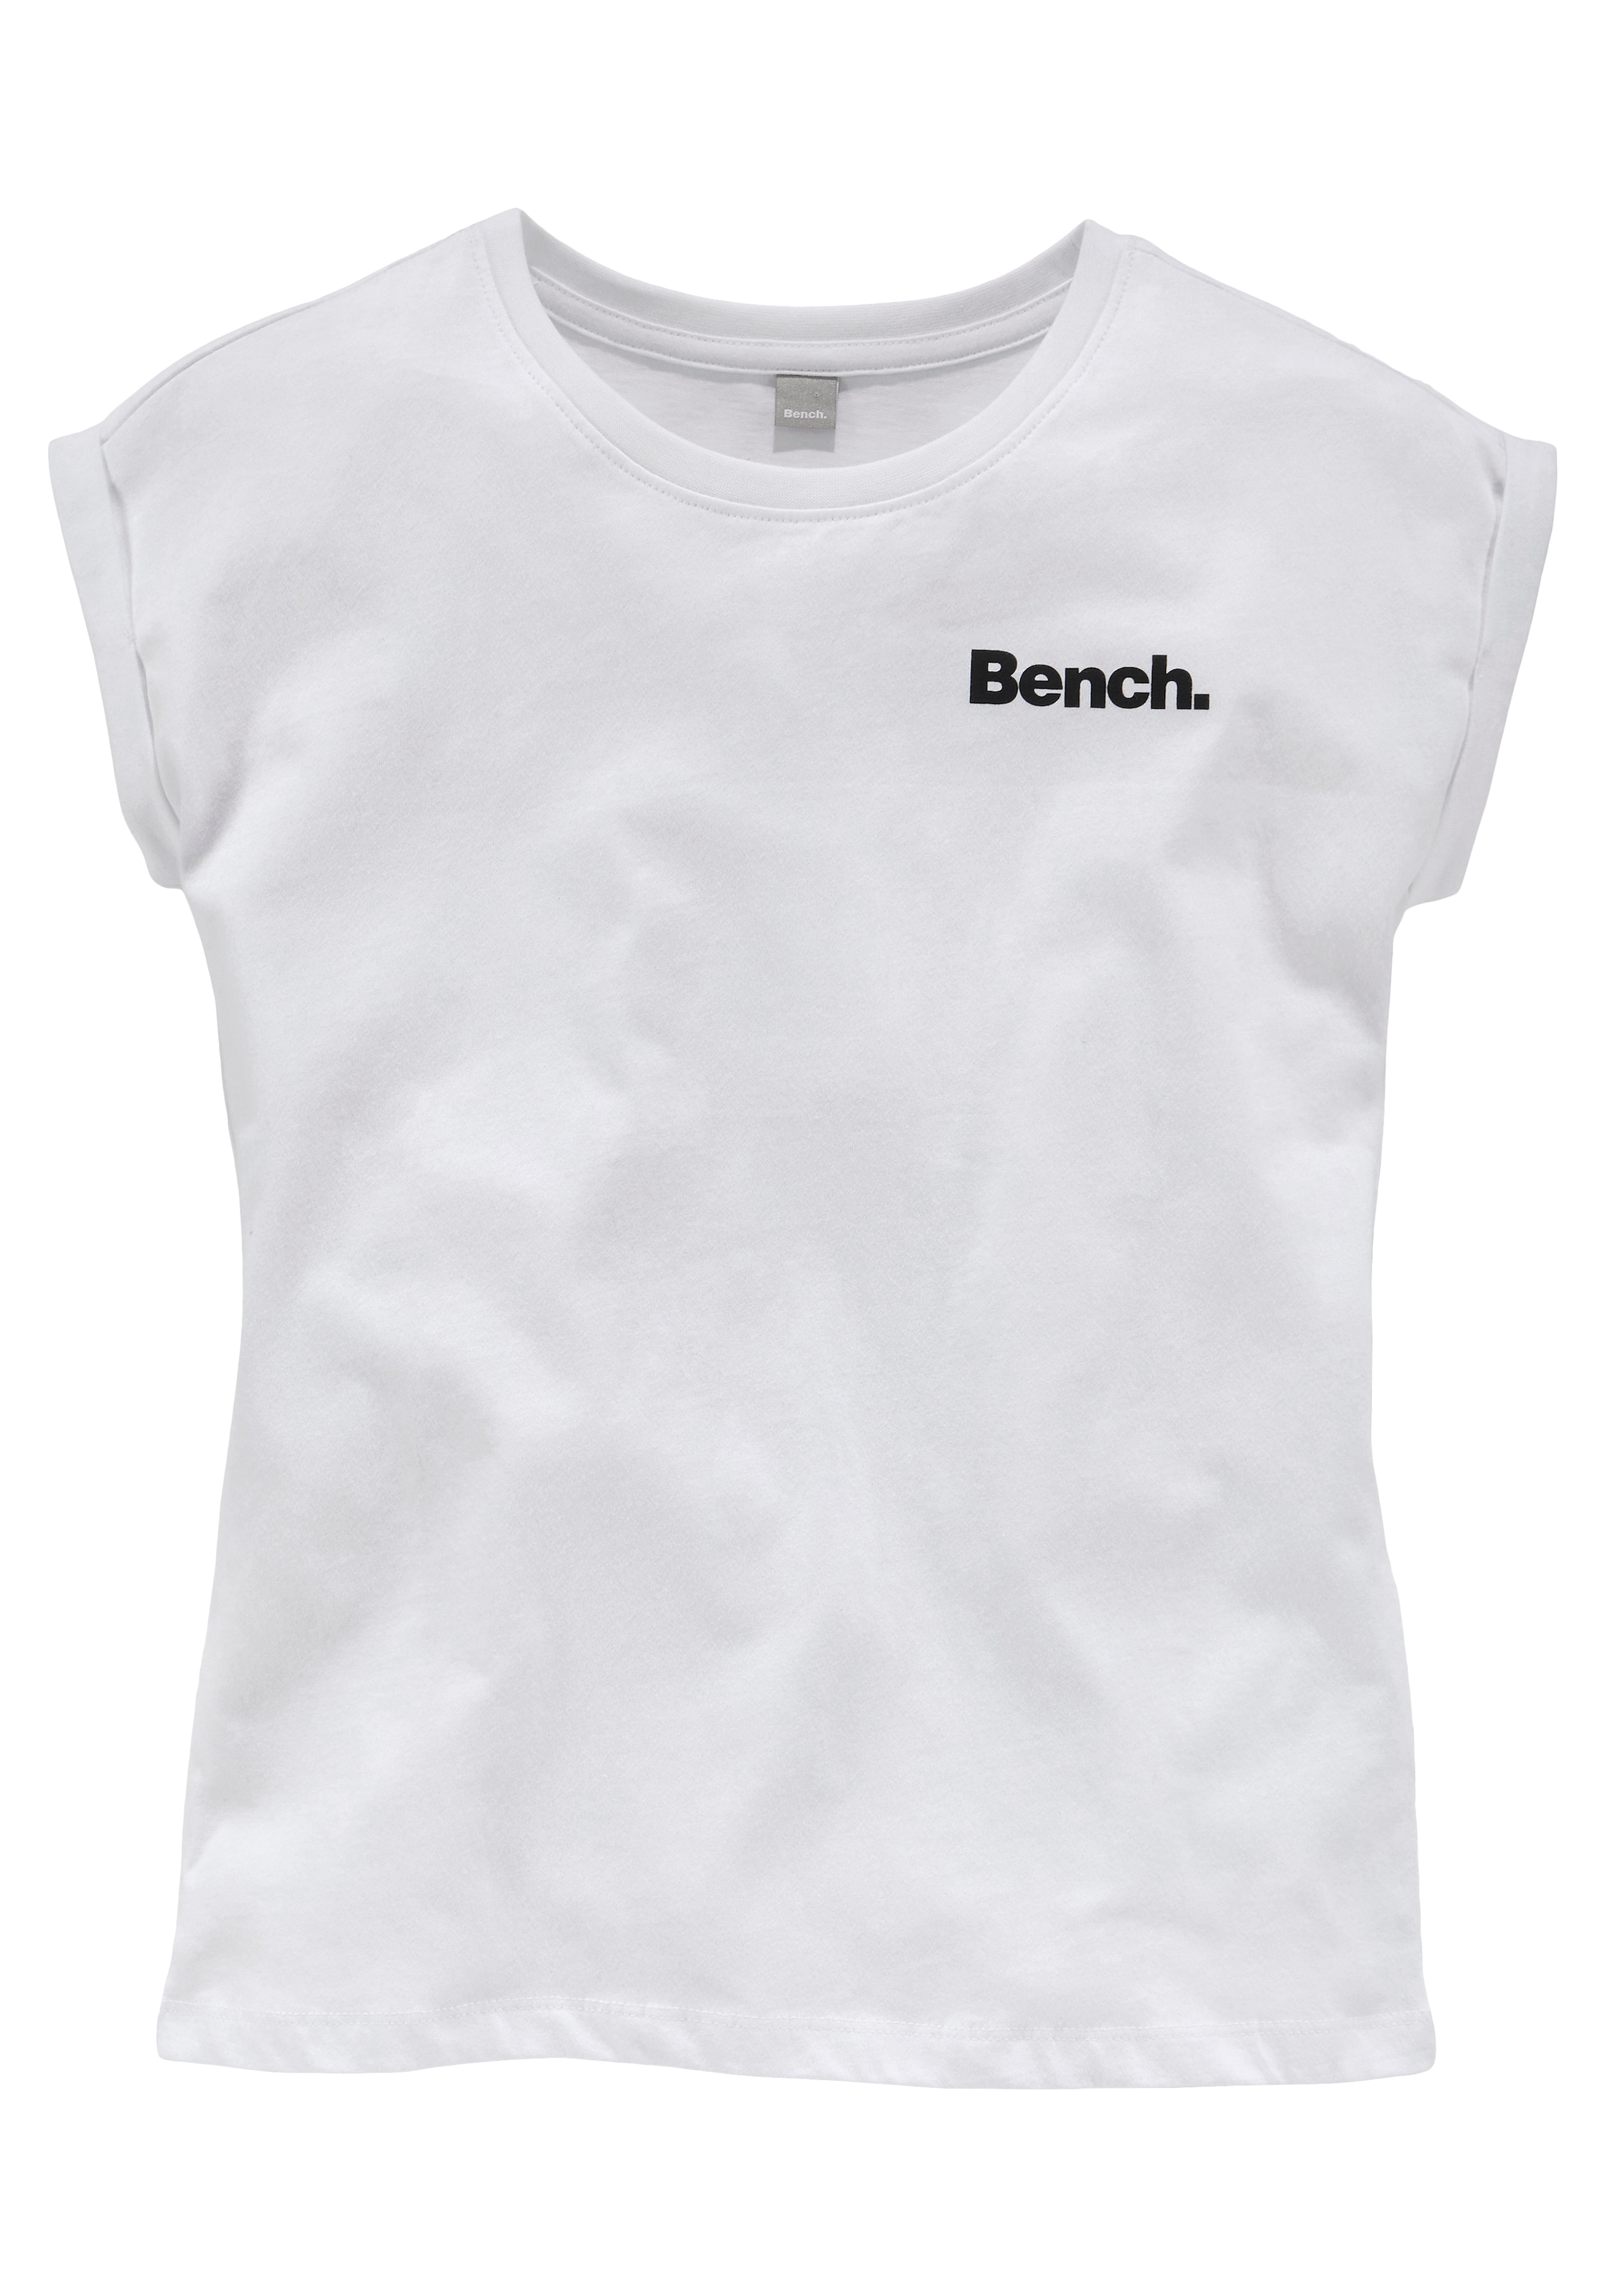 Bench. T-Shirt, mit Rückendruck bei Logo ♕